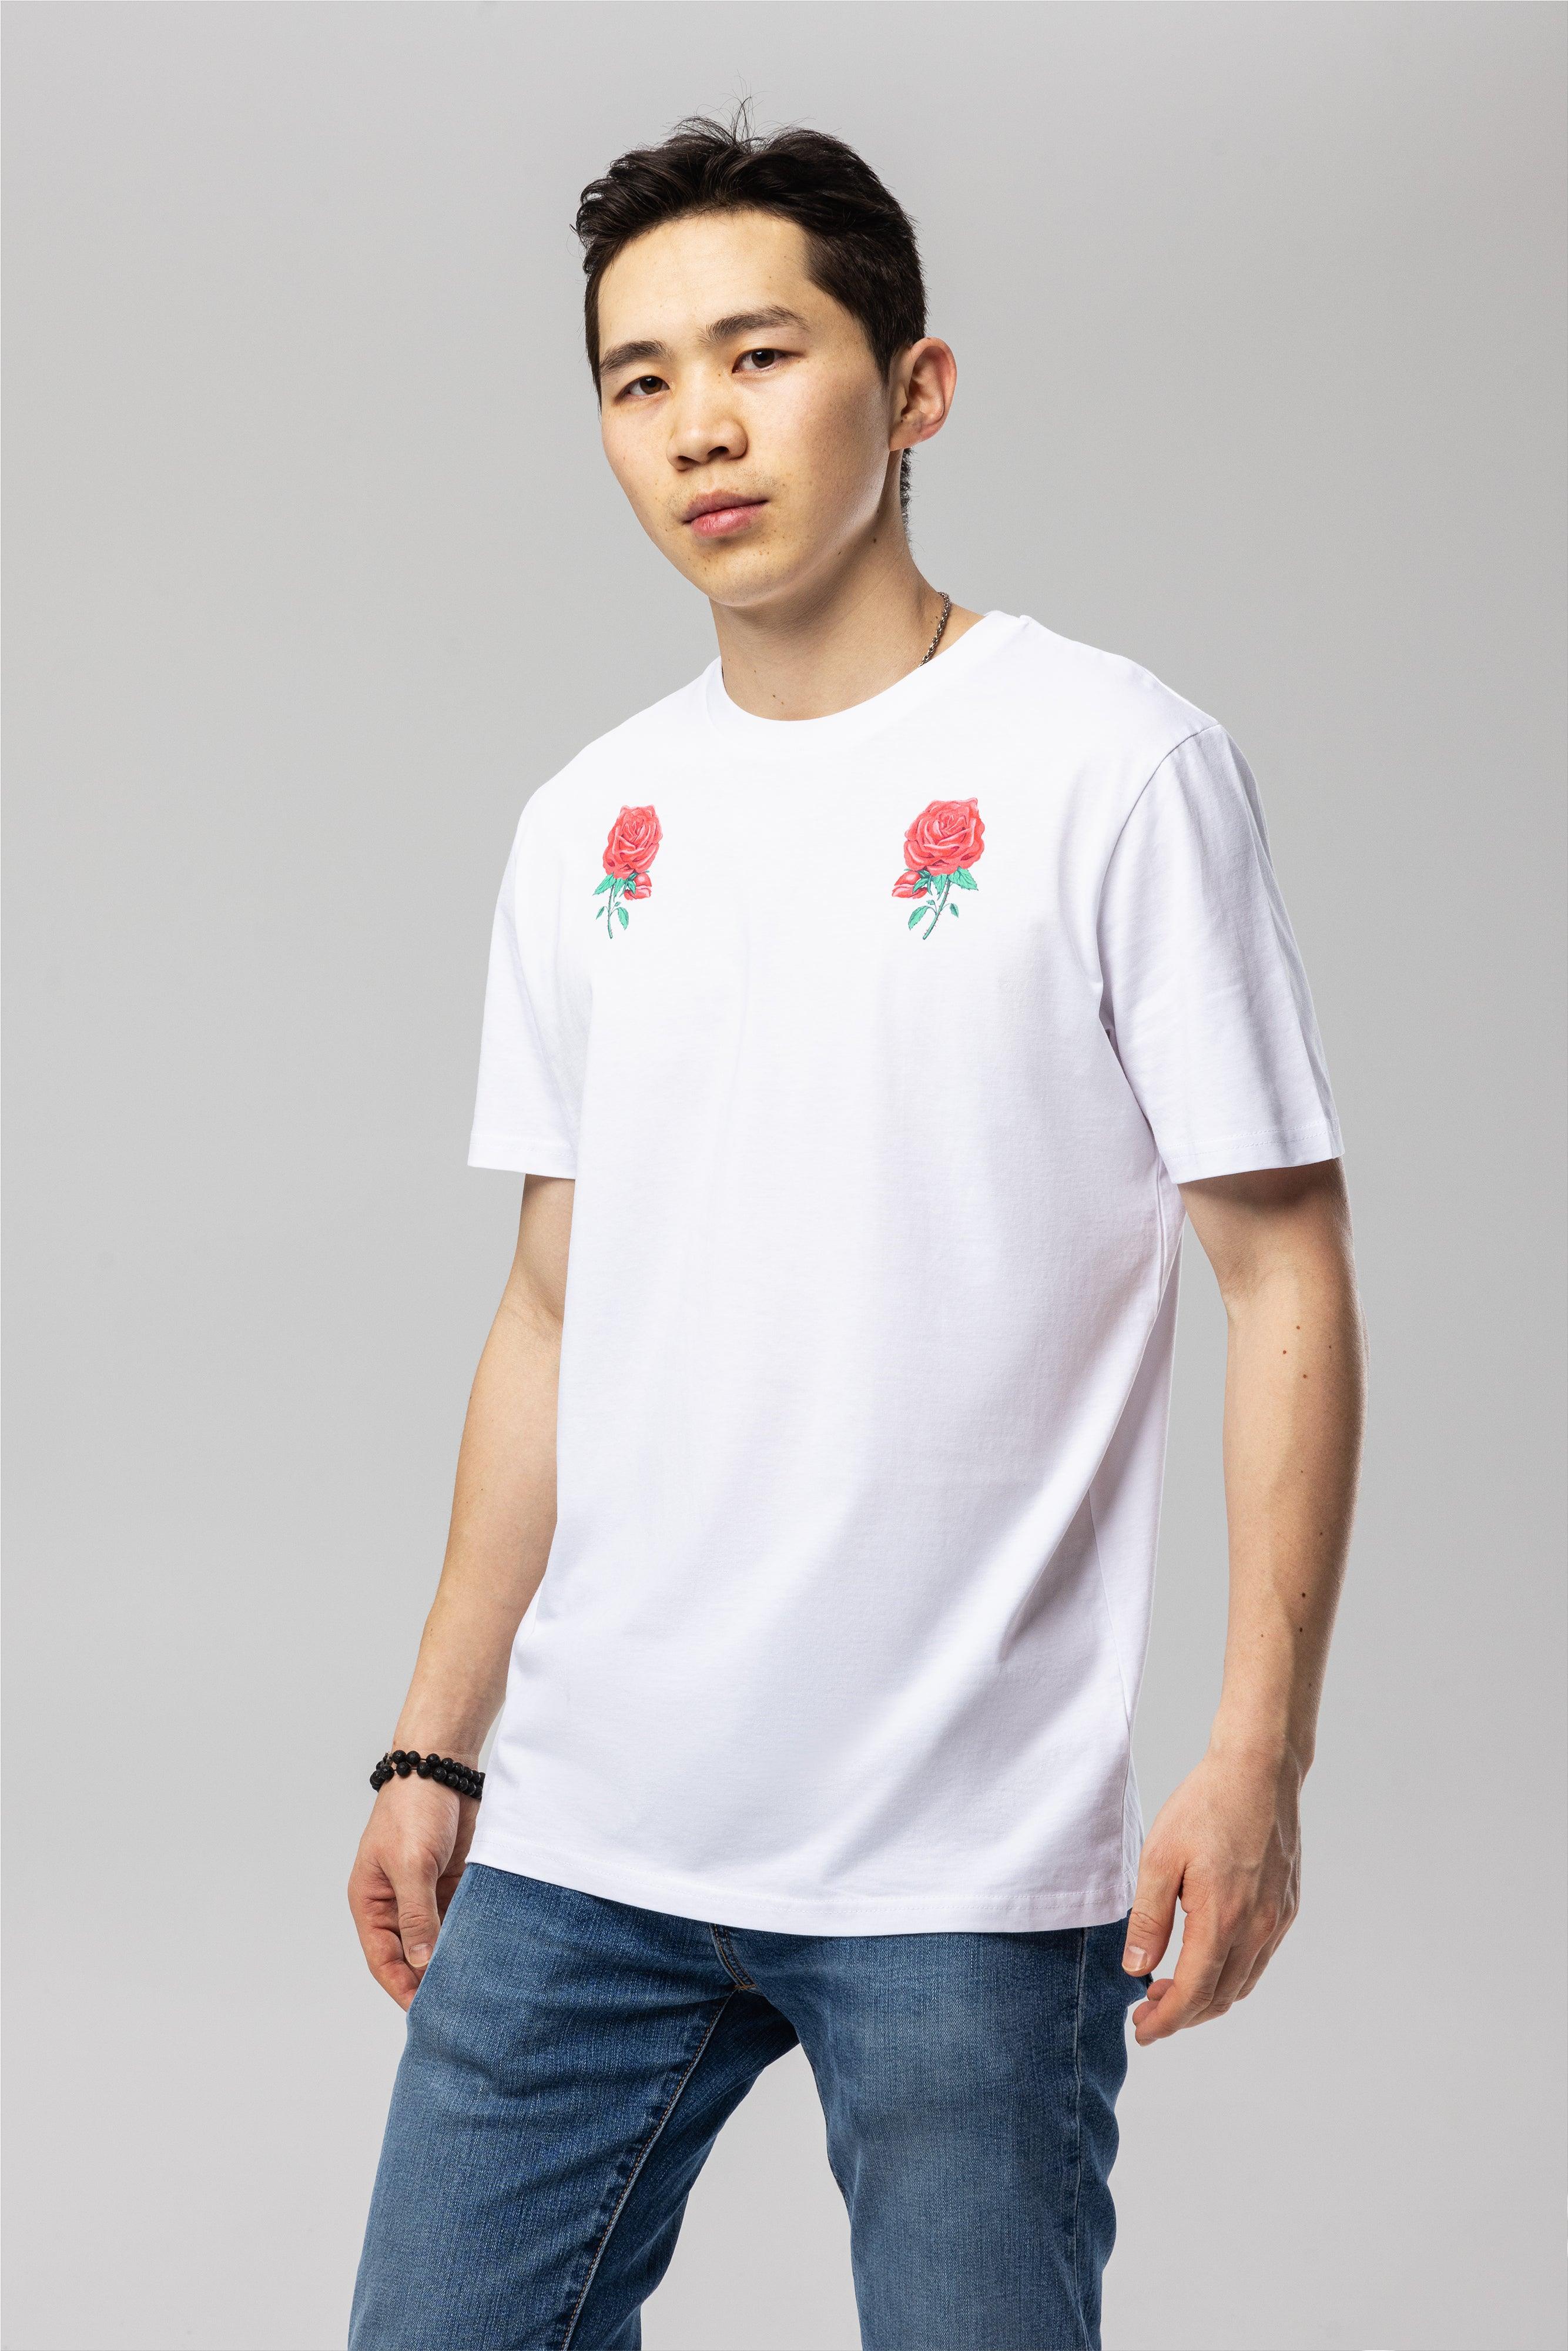 Flower Arms T-Shirt